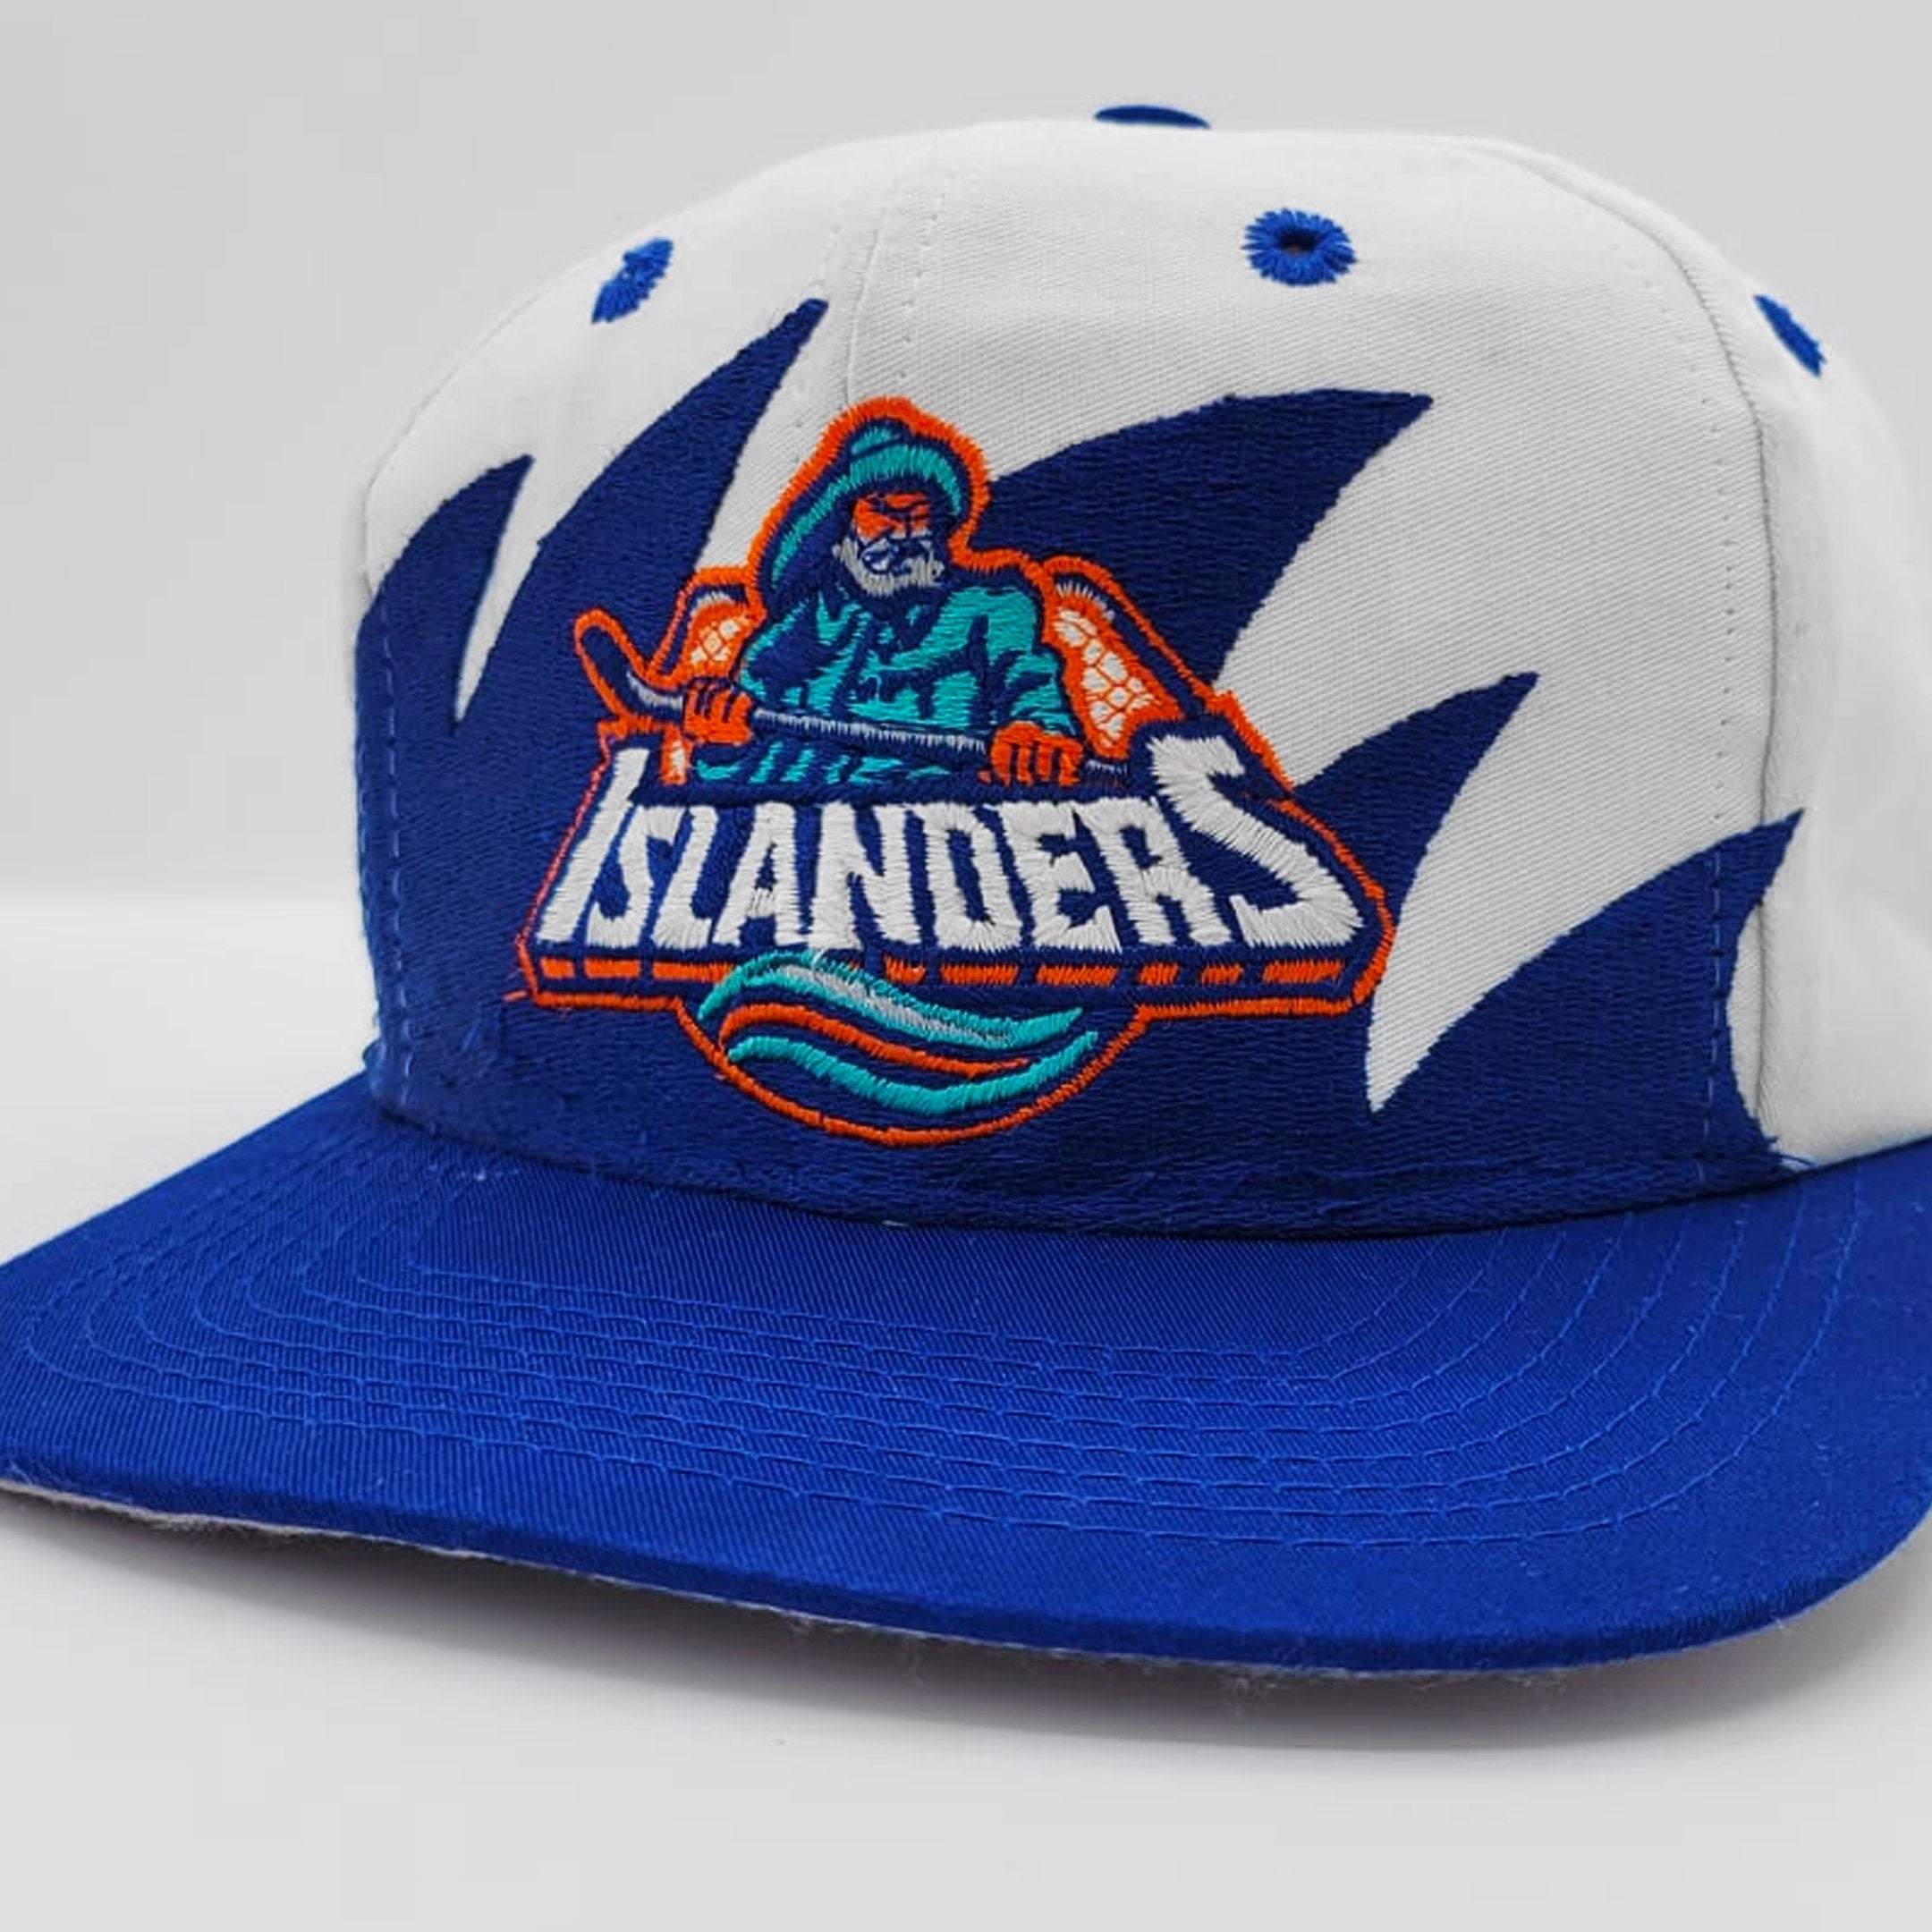 New York Islanders brings back Fisherman logo